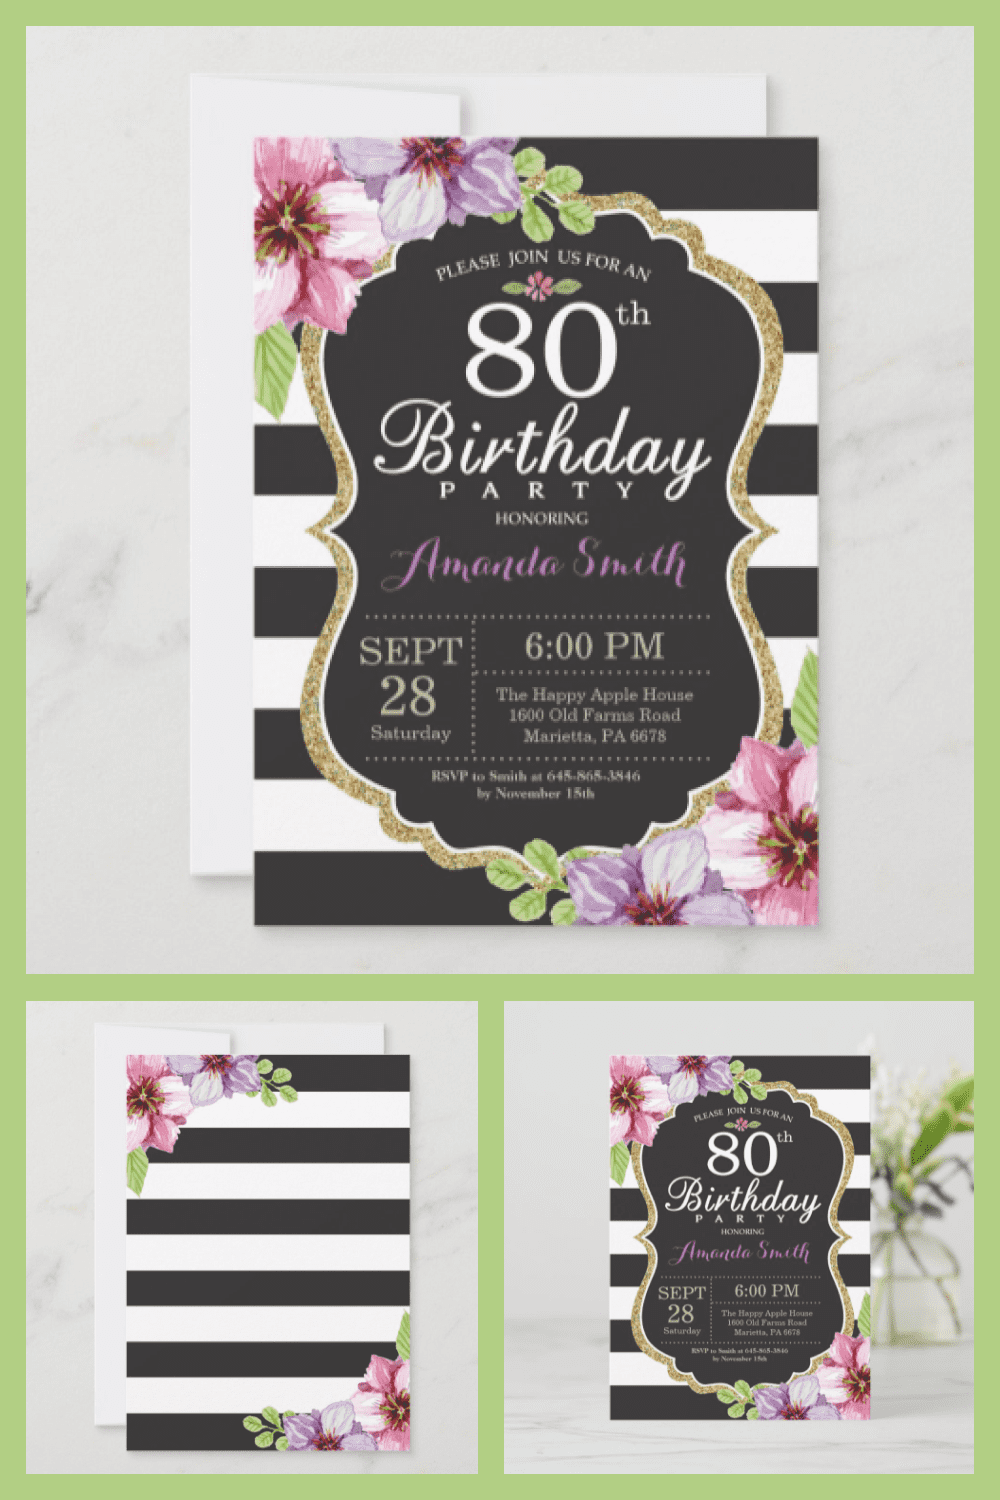 Cute floral 80th birthday invitation.